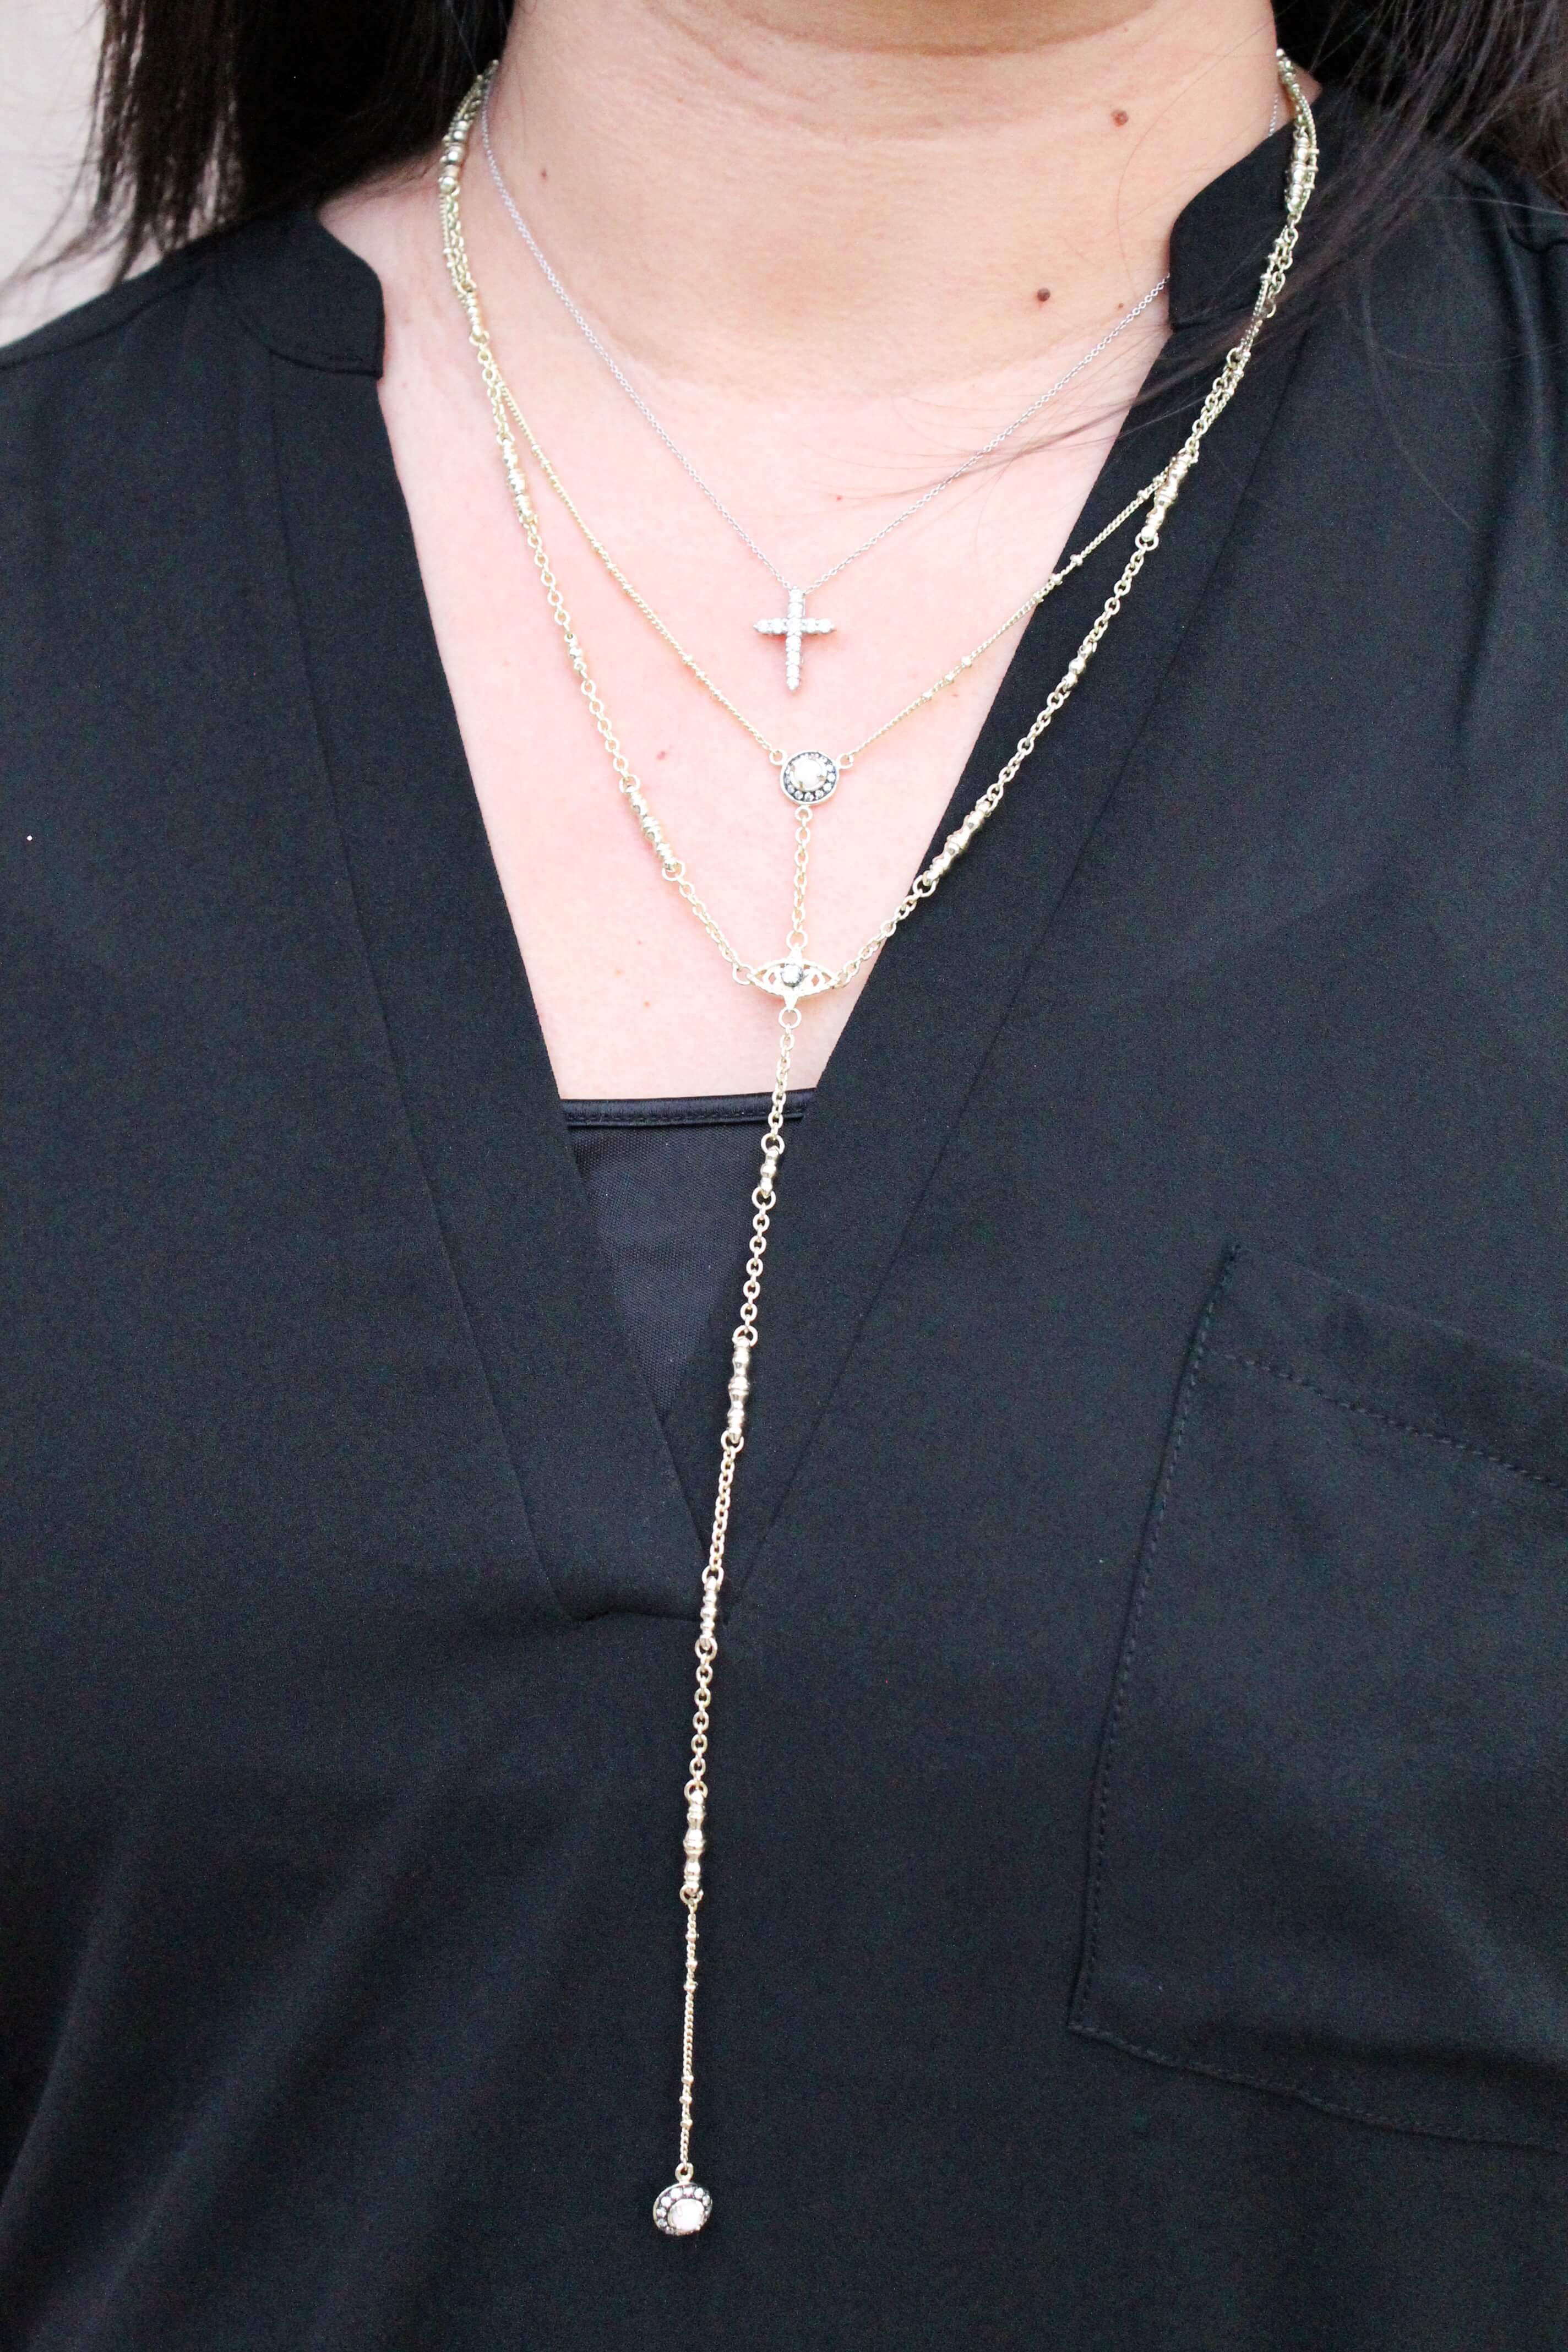 Kendra Scott lariat necklace.